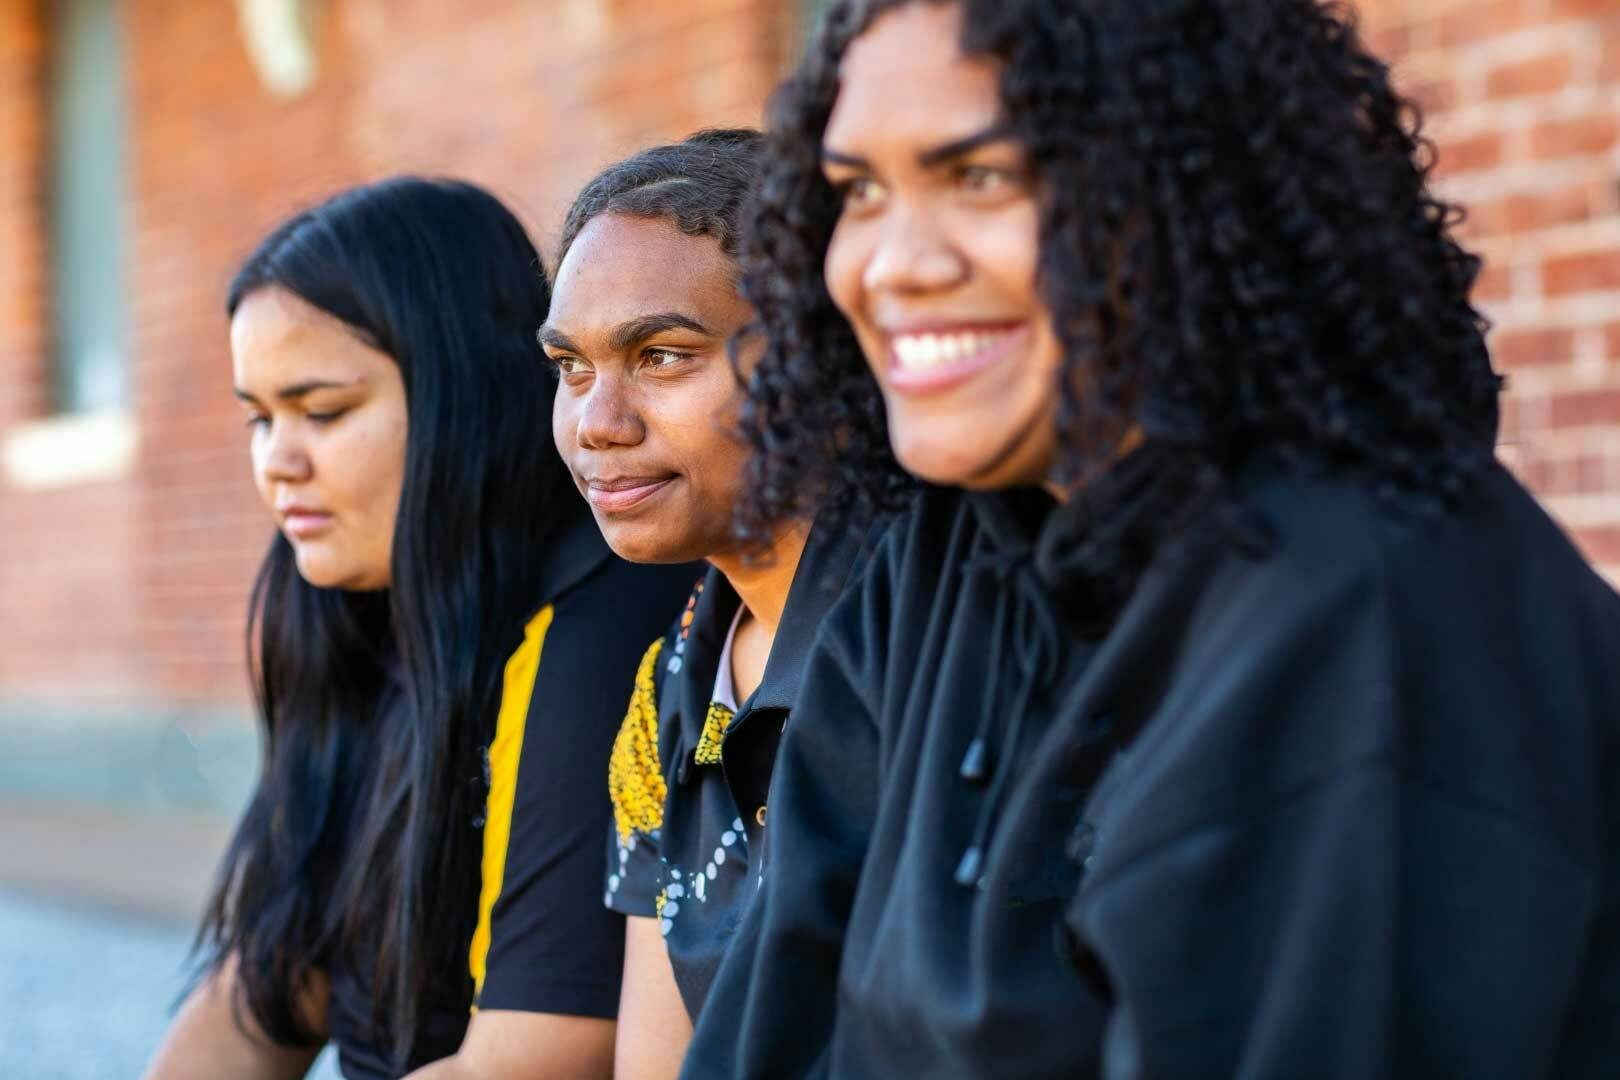 Austock000141679 three young Aboriginal women on campus